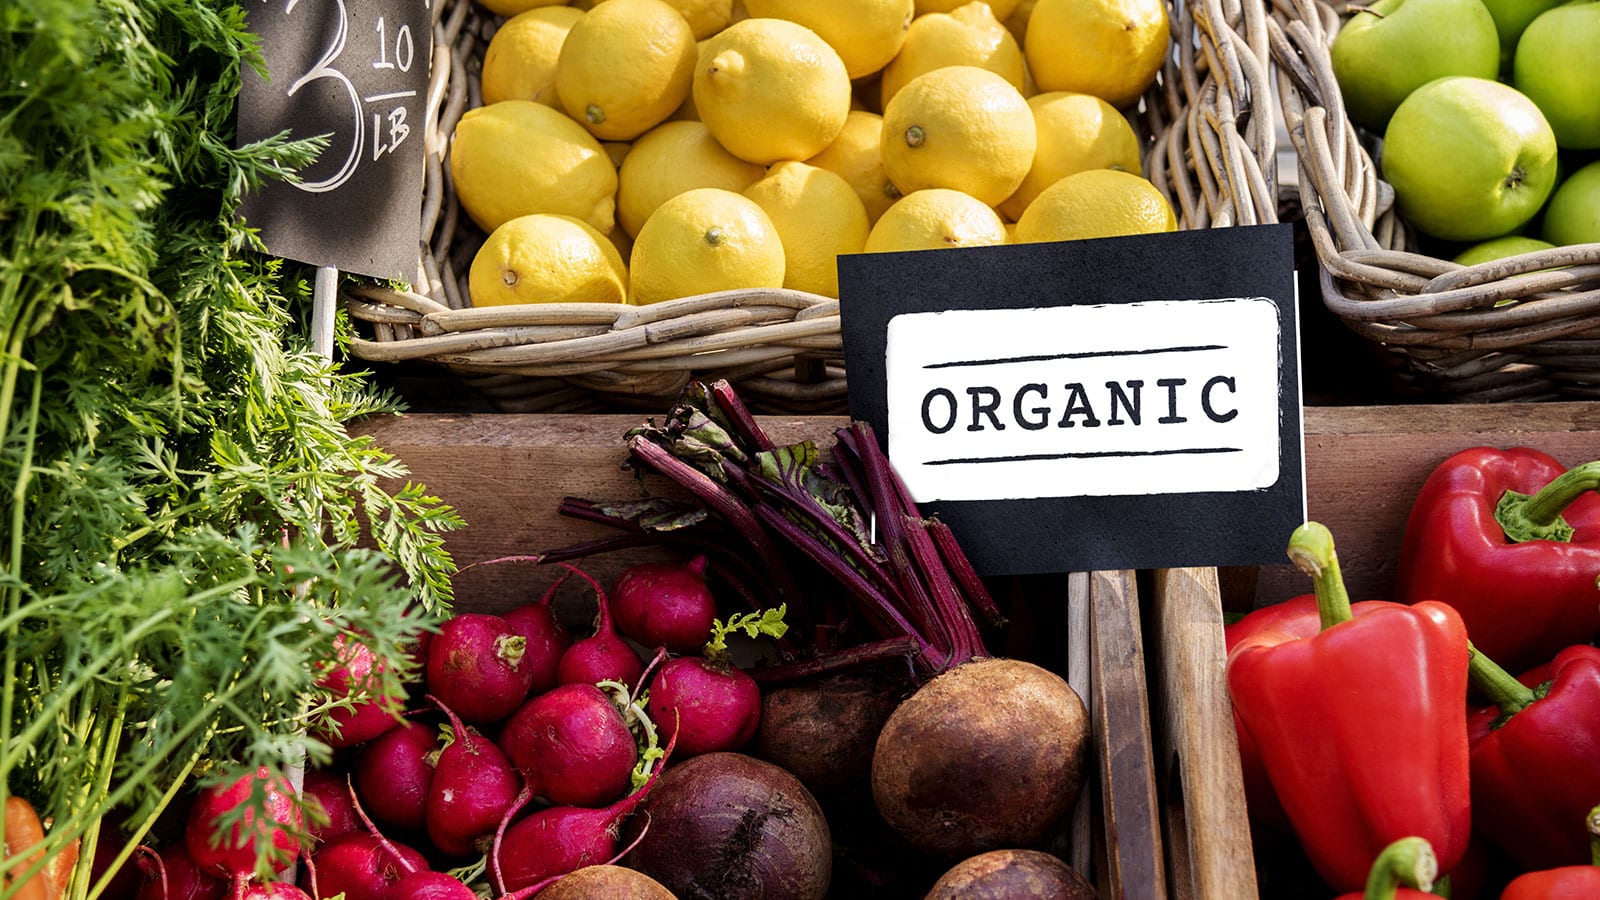 Baskets of fresh organic produce.